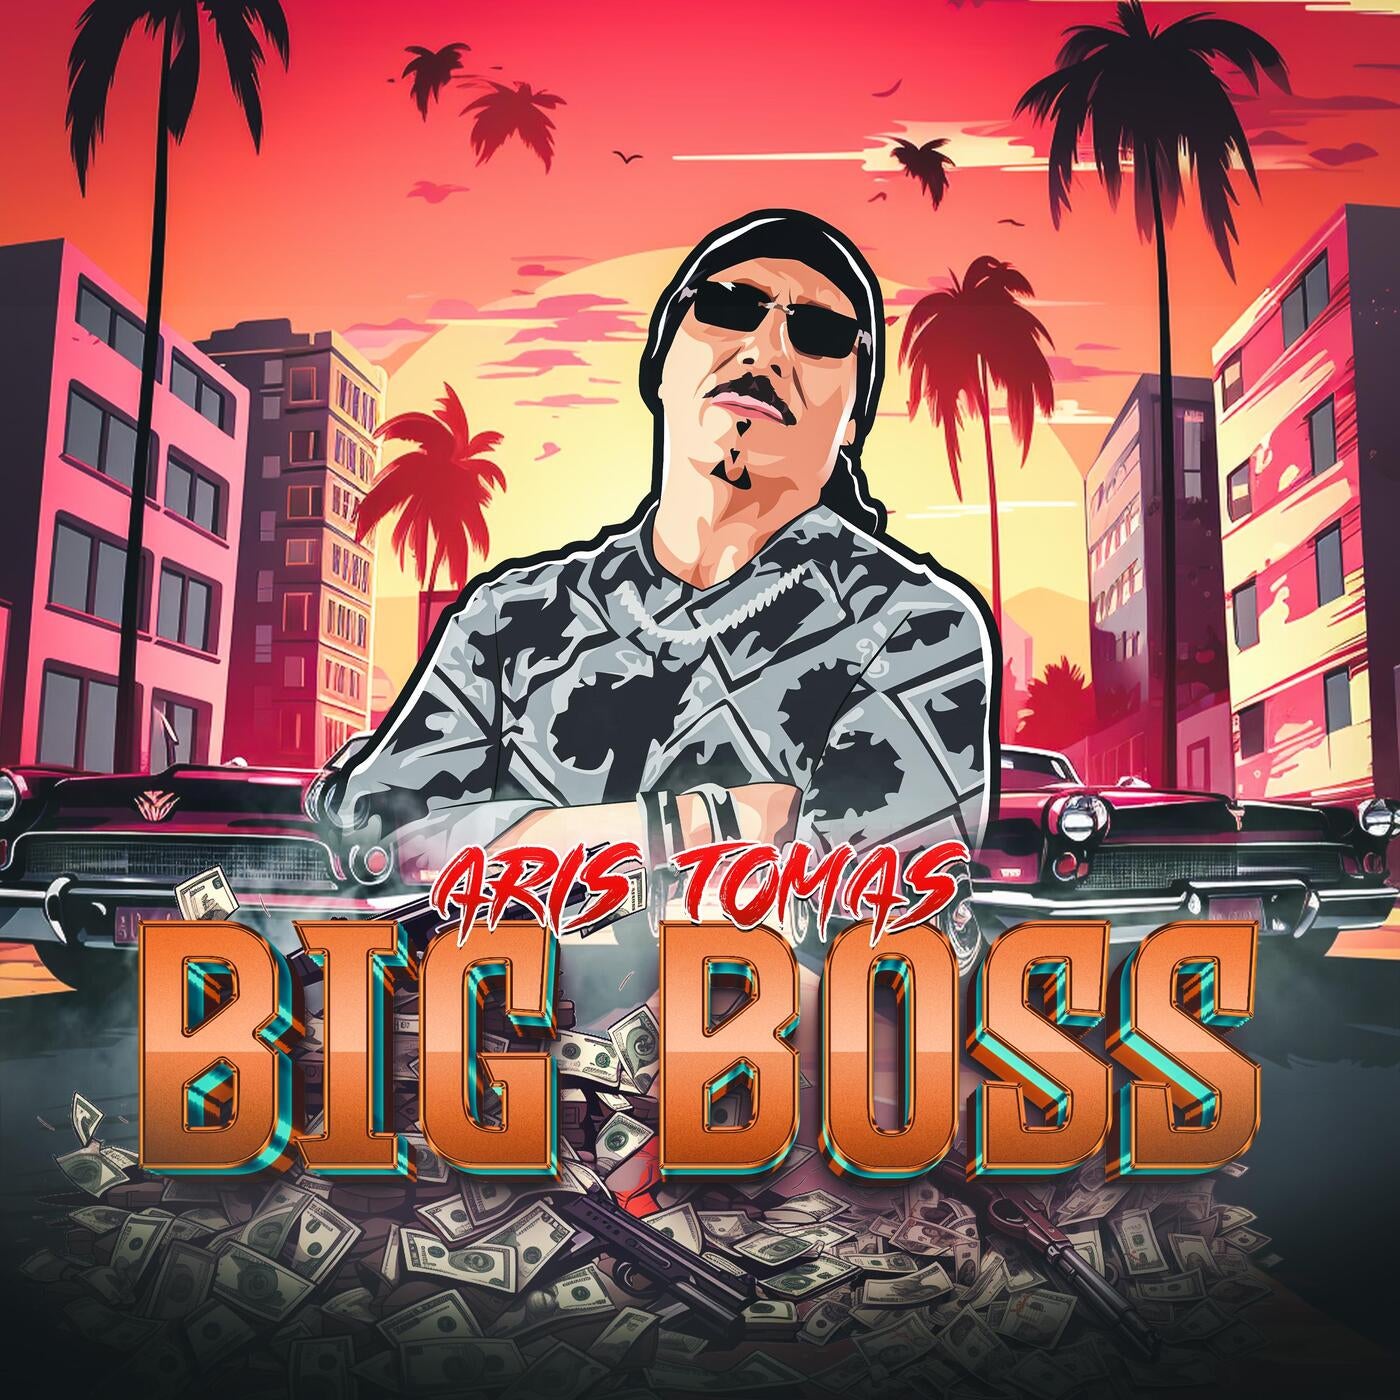 Big Boss (Extended Version)